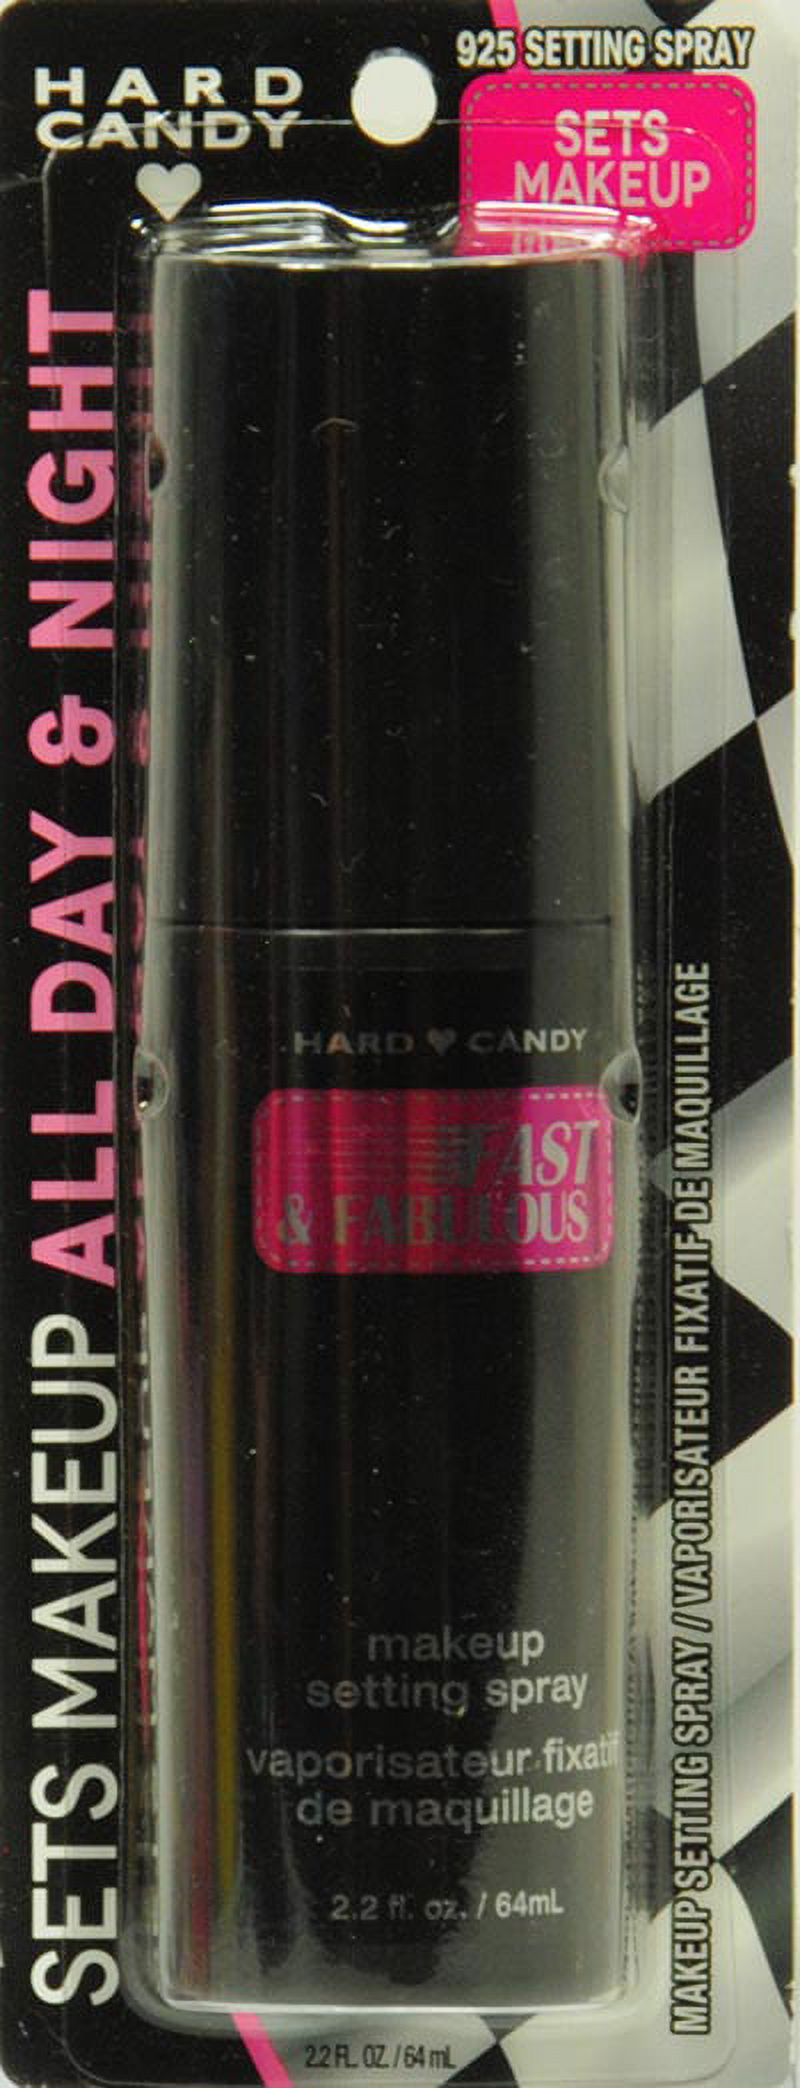 Hard Candy Fast & Fabulous Makeup Setting Spray, 2.2 fl oz - image 2 of 2